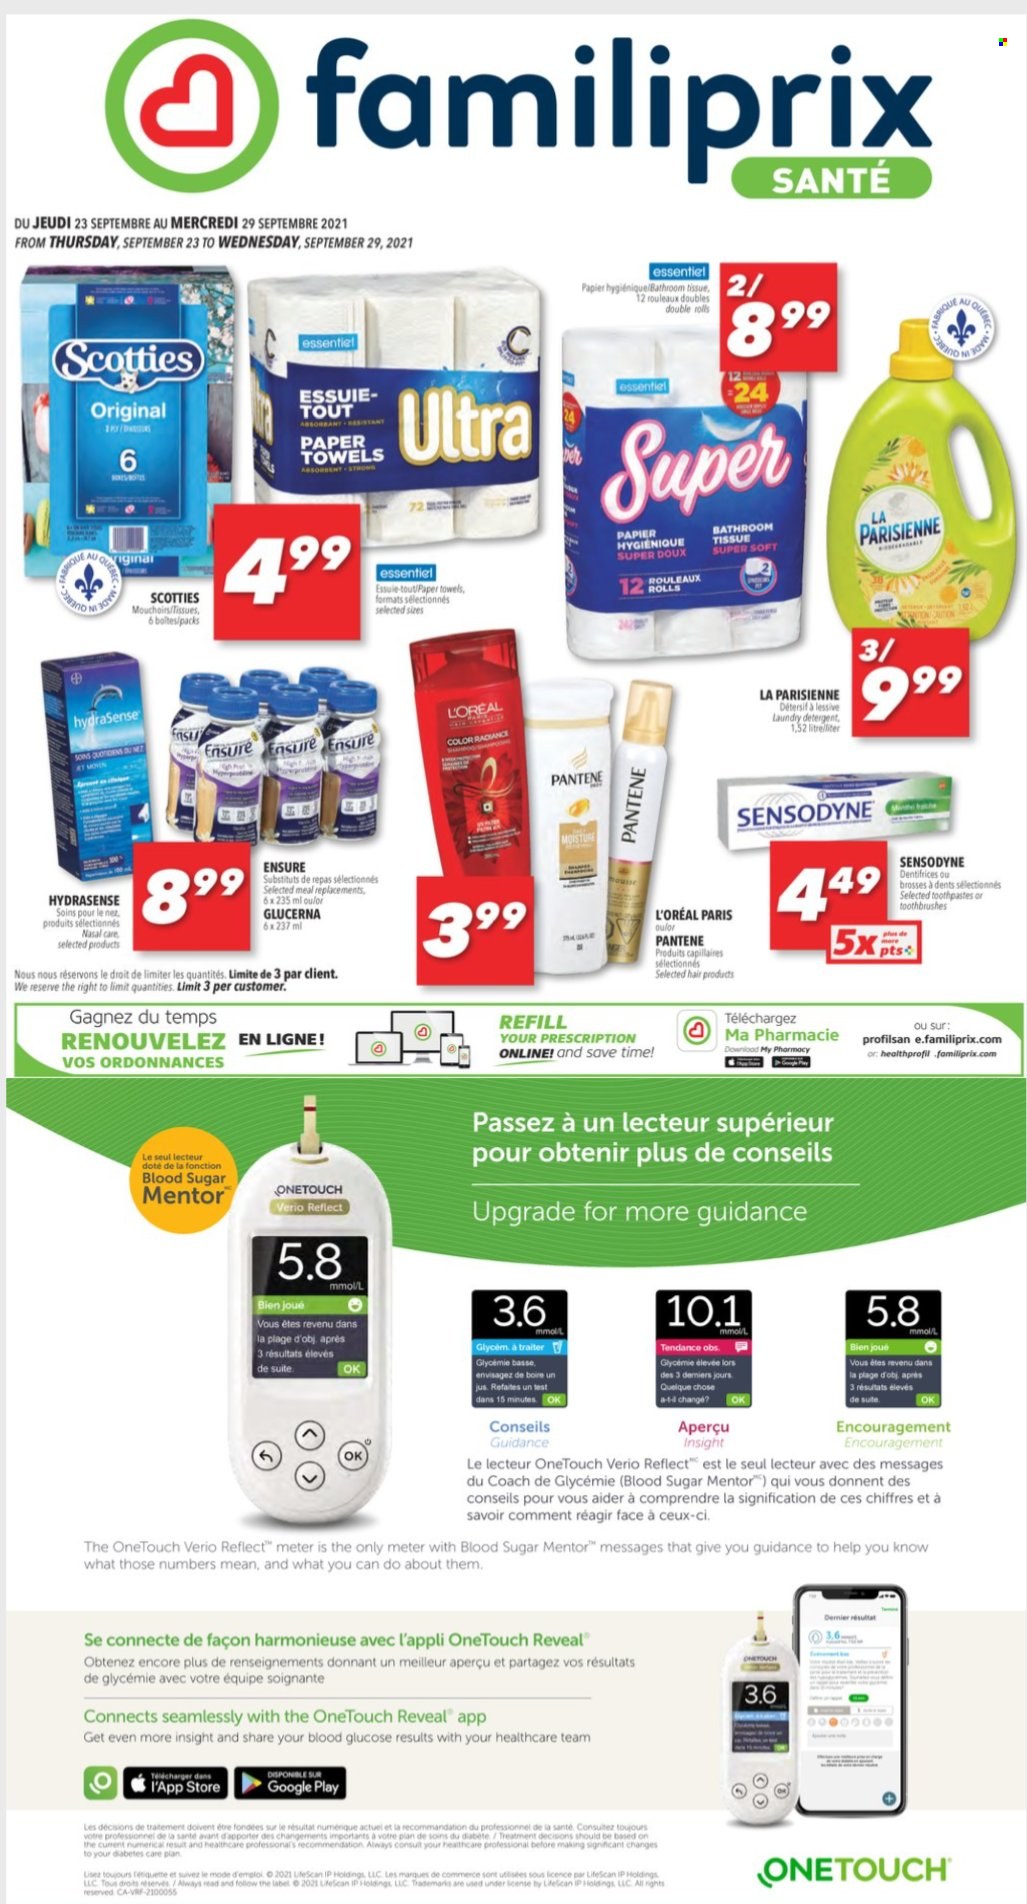 thumbnail - Familiprix Santé Flyer - September 23, 2021 - September 29, 2021 - Sales products - sugar, bath tissue, kitchen towels, paper towels, L’Oréal, Glucerna, Pantene, Sensodyne. Page 1.